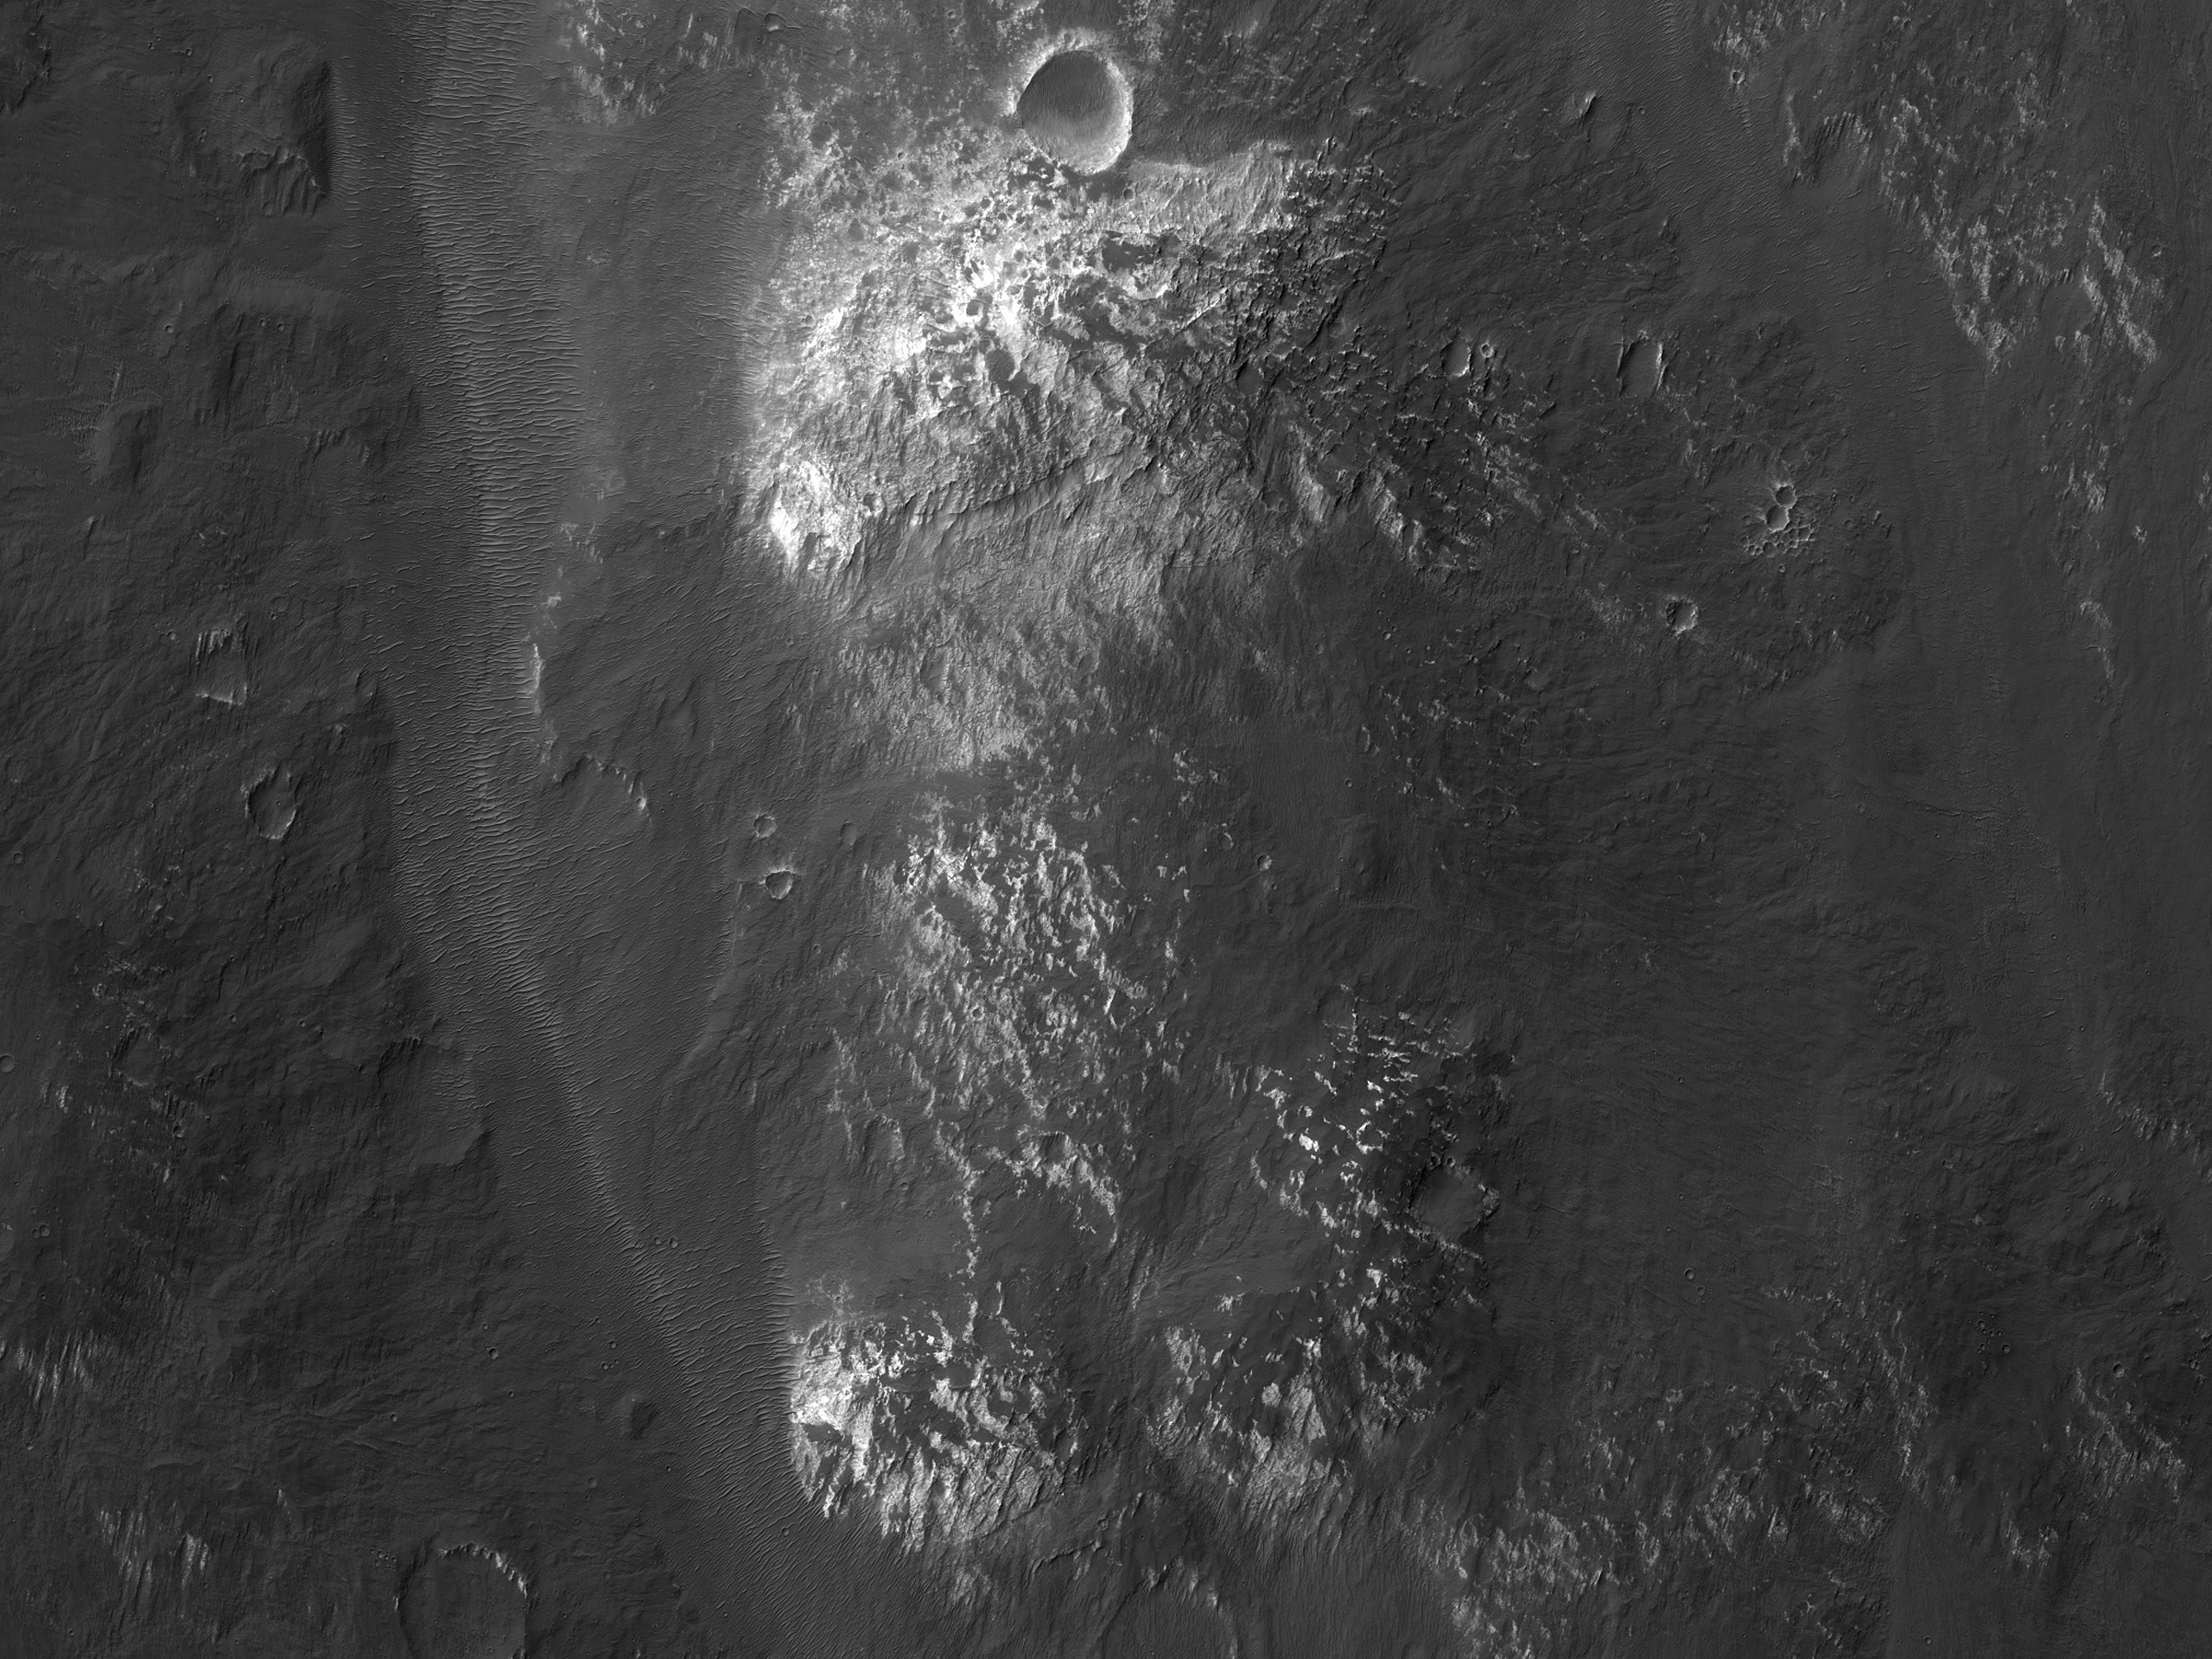 A Side Channel of Uzboi Vallis